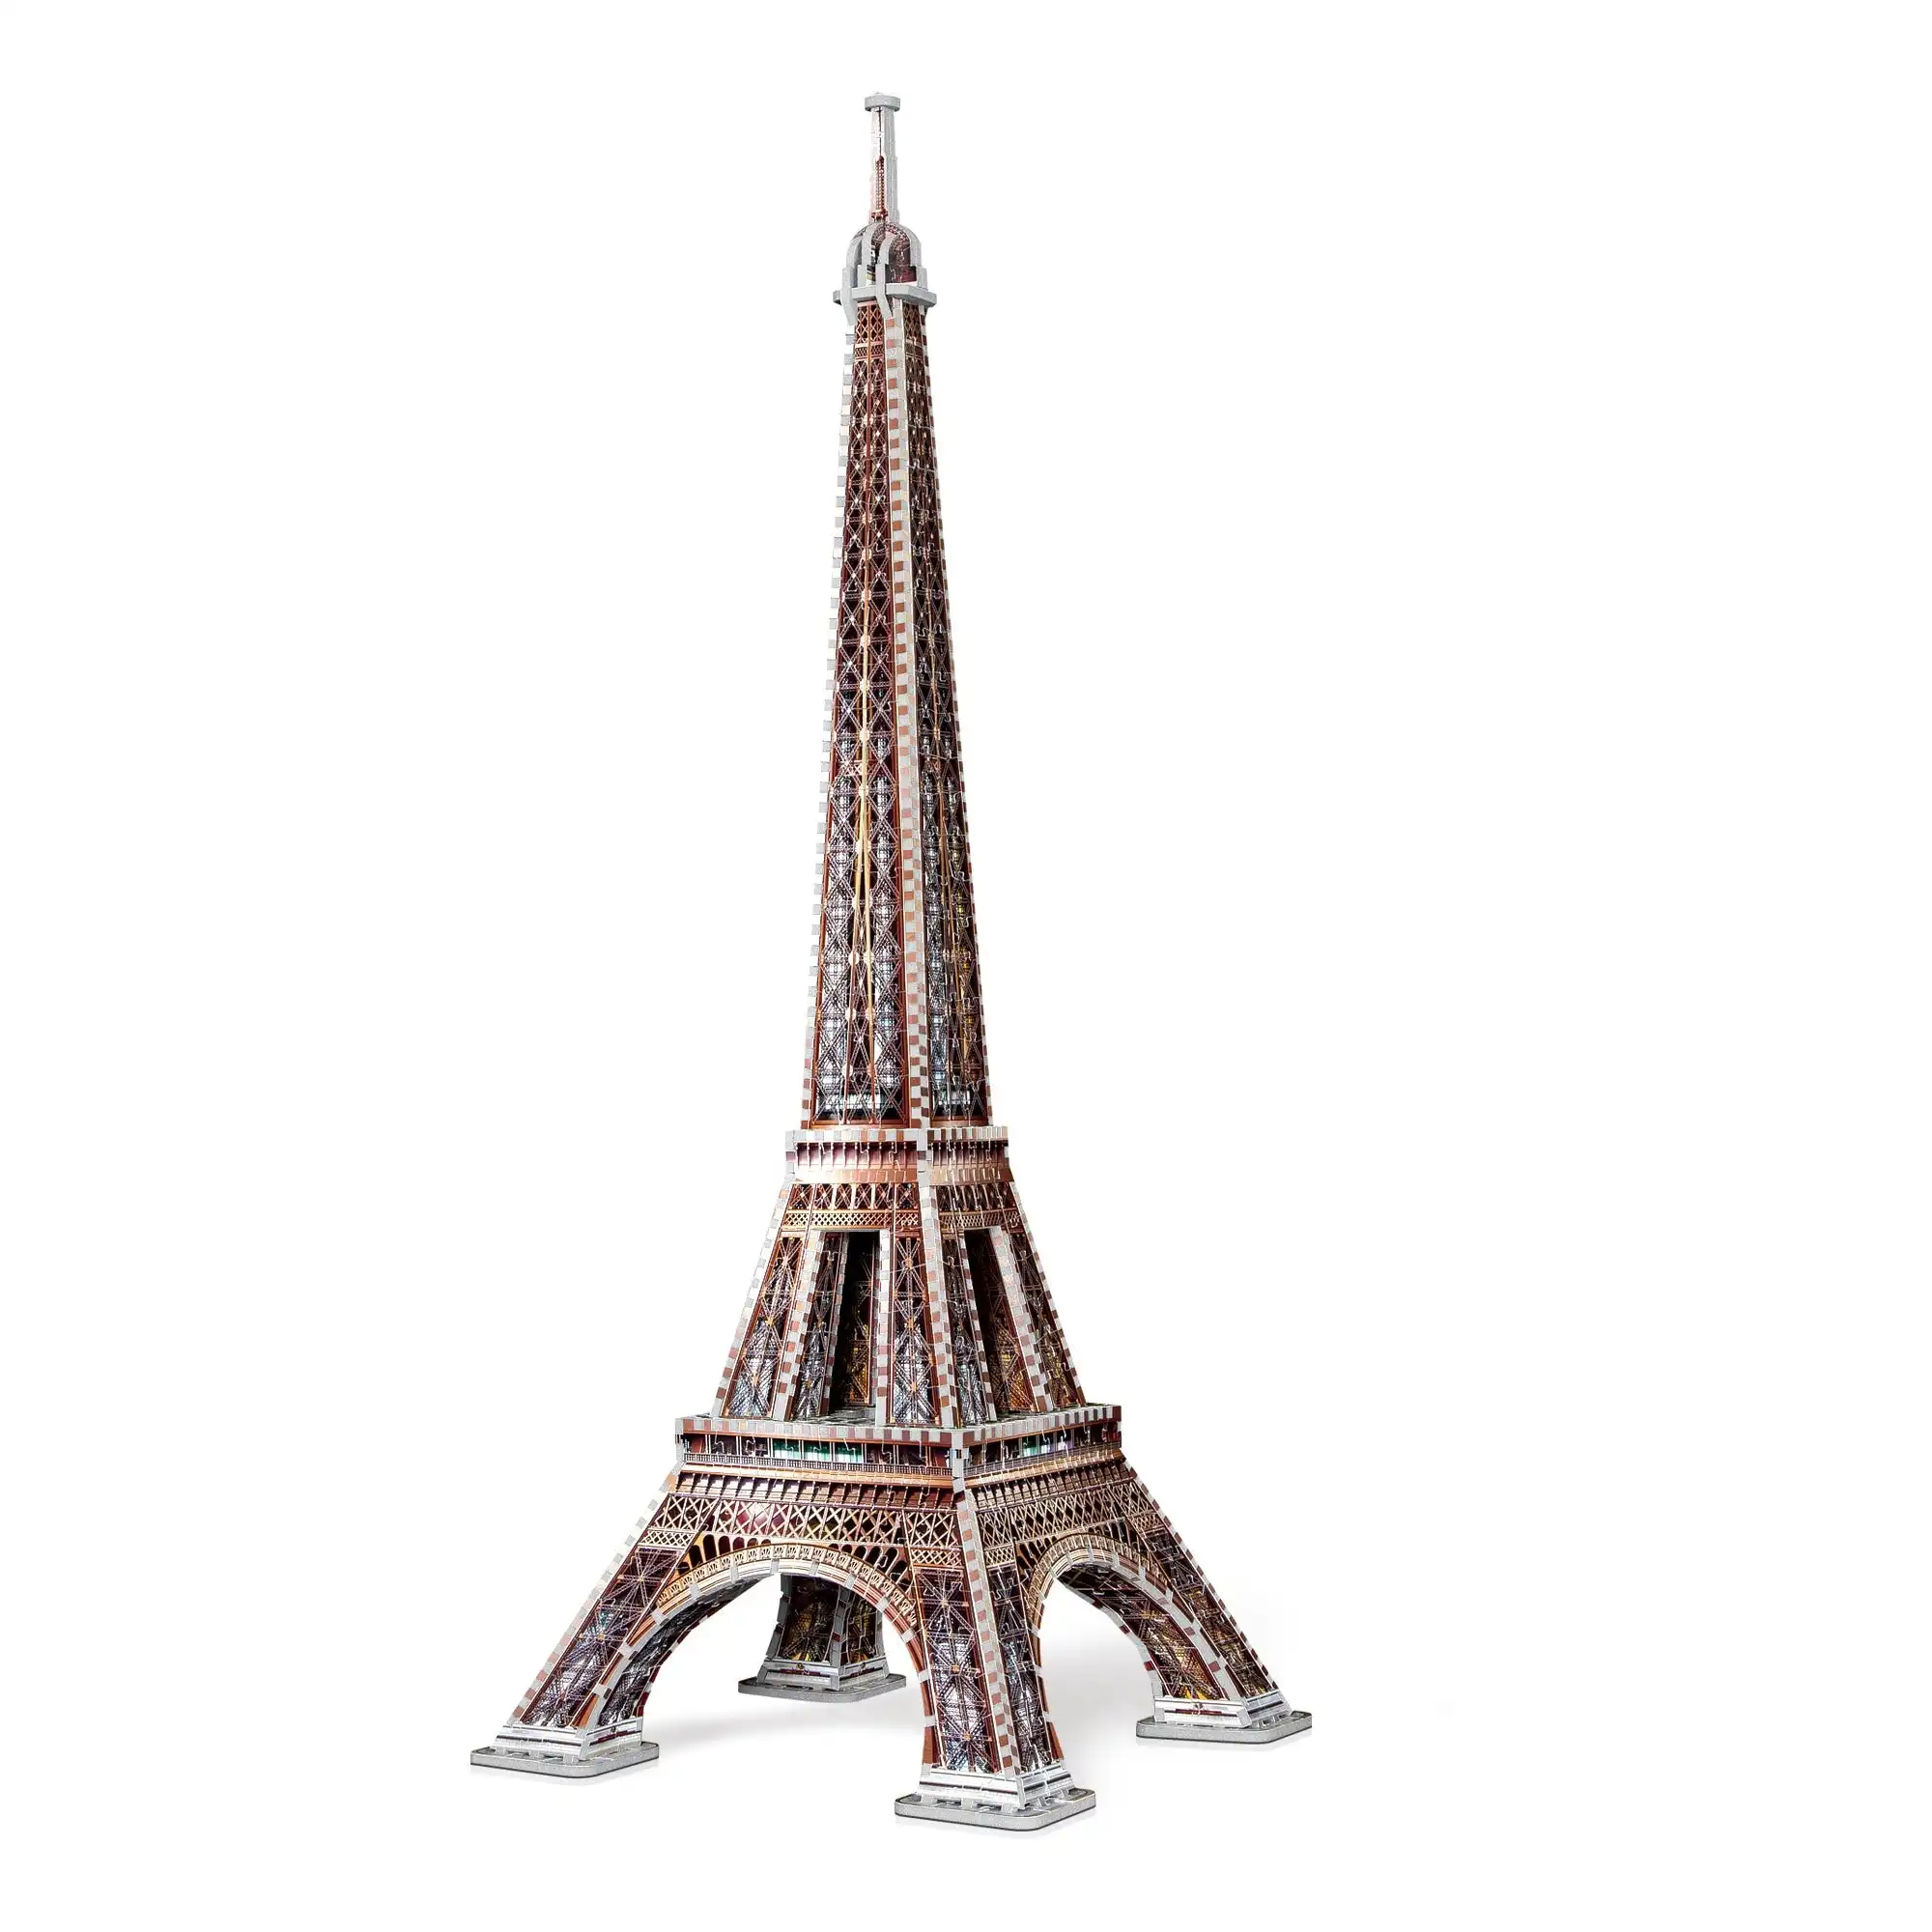 3D The Eiffel Tower 816pc Puzzle